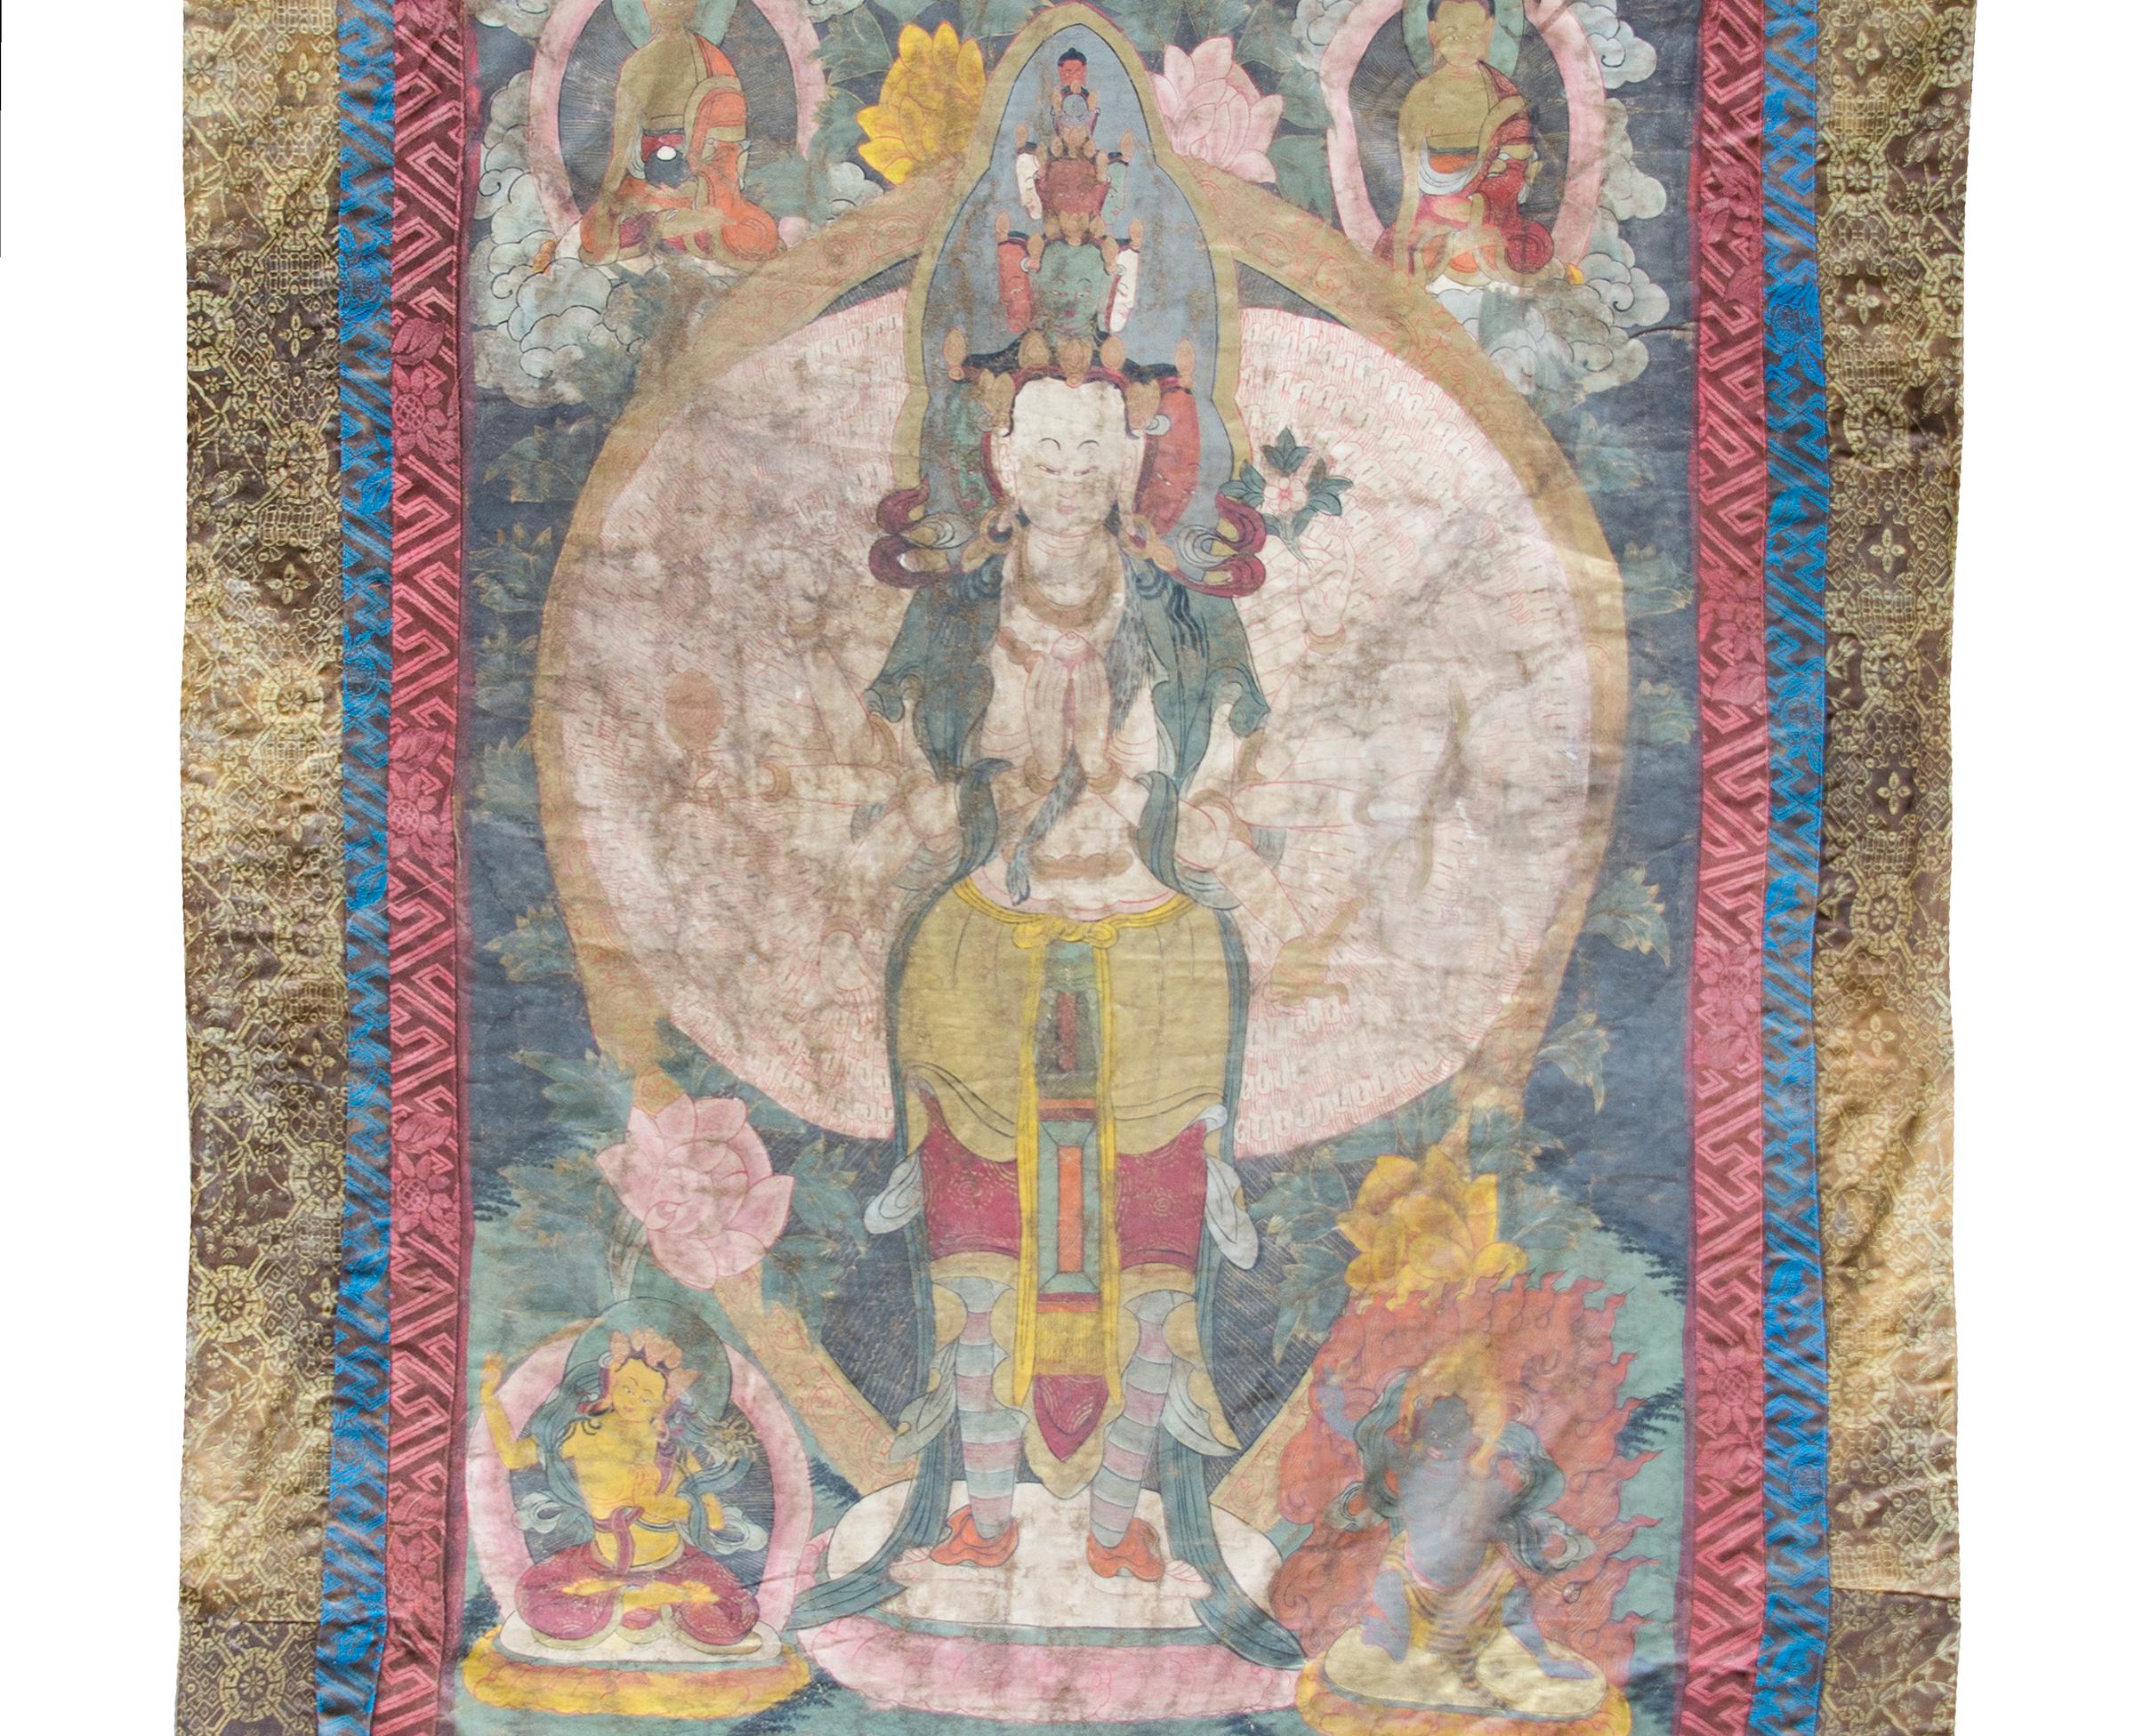 A stunning late 19th century Tibetan Thangka depicting the Buddhist goddess, Sitatapattra. The term 